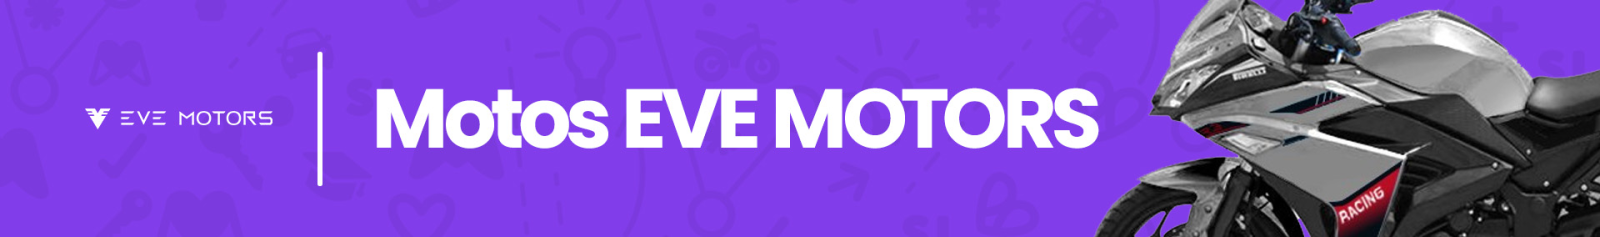 Motos Eve Motors Chile